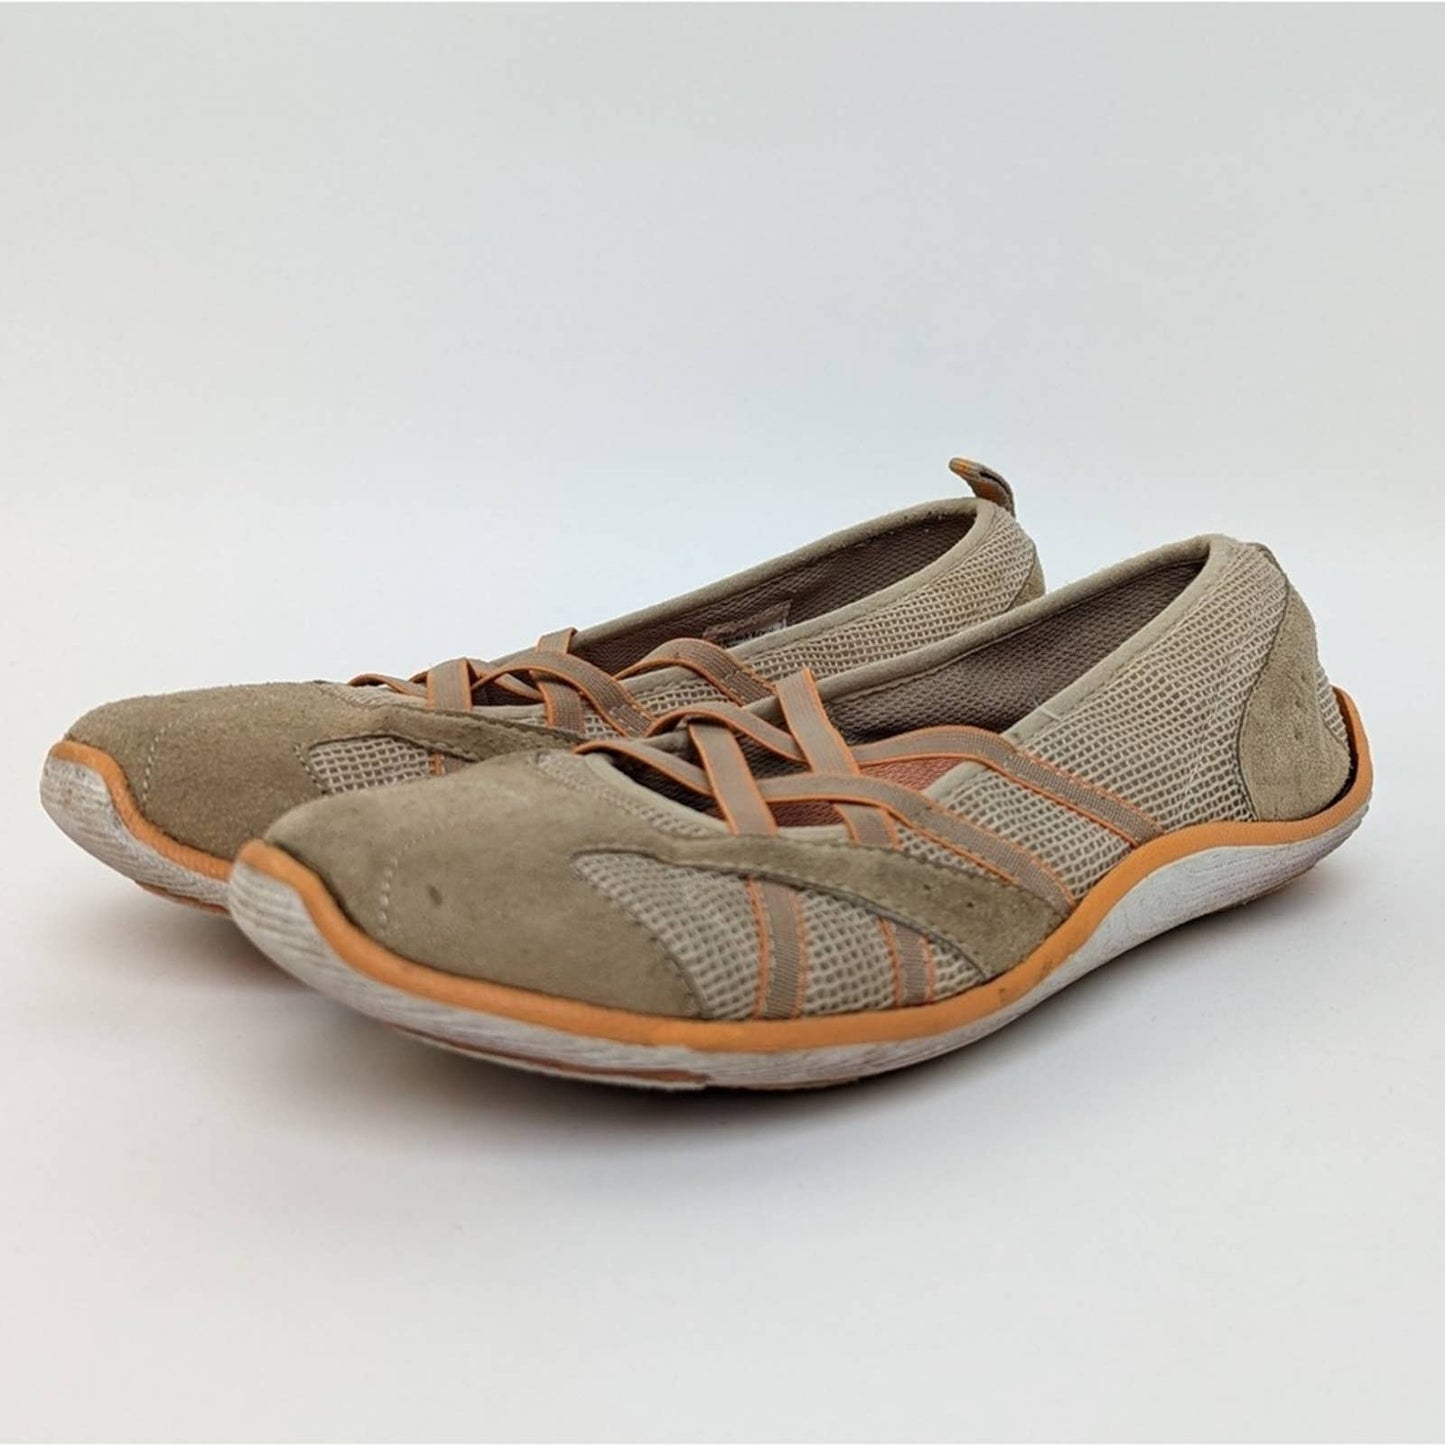 Dr. Scholls Elsie Tan-Orange Slip On Walking Shoes - 9